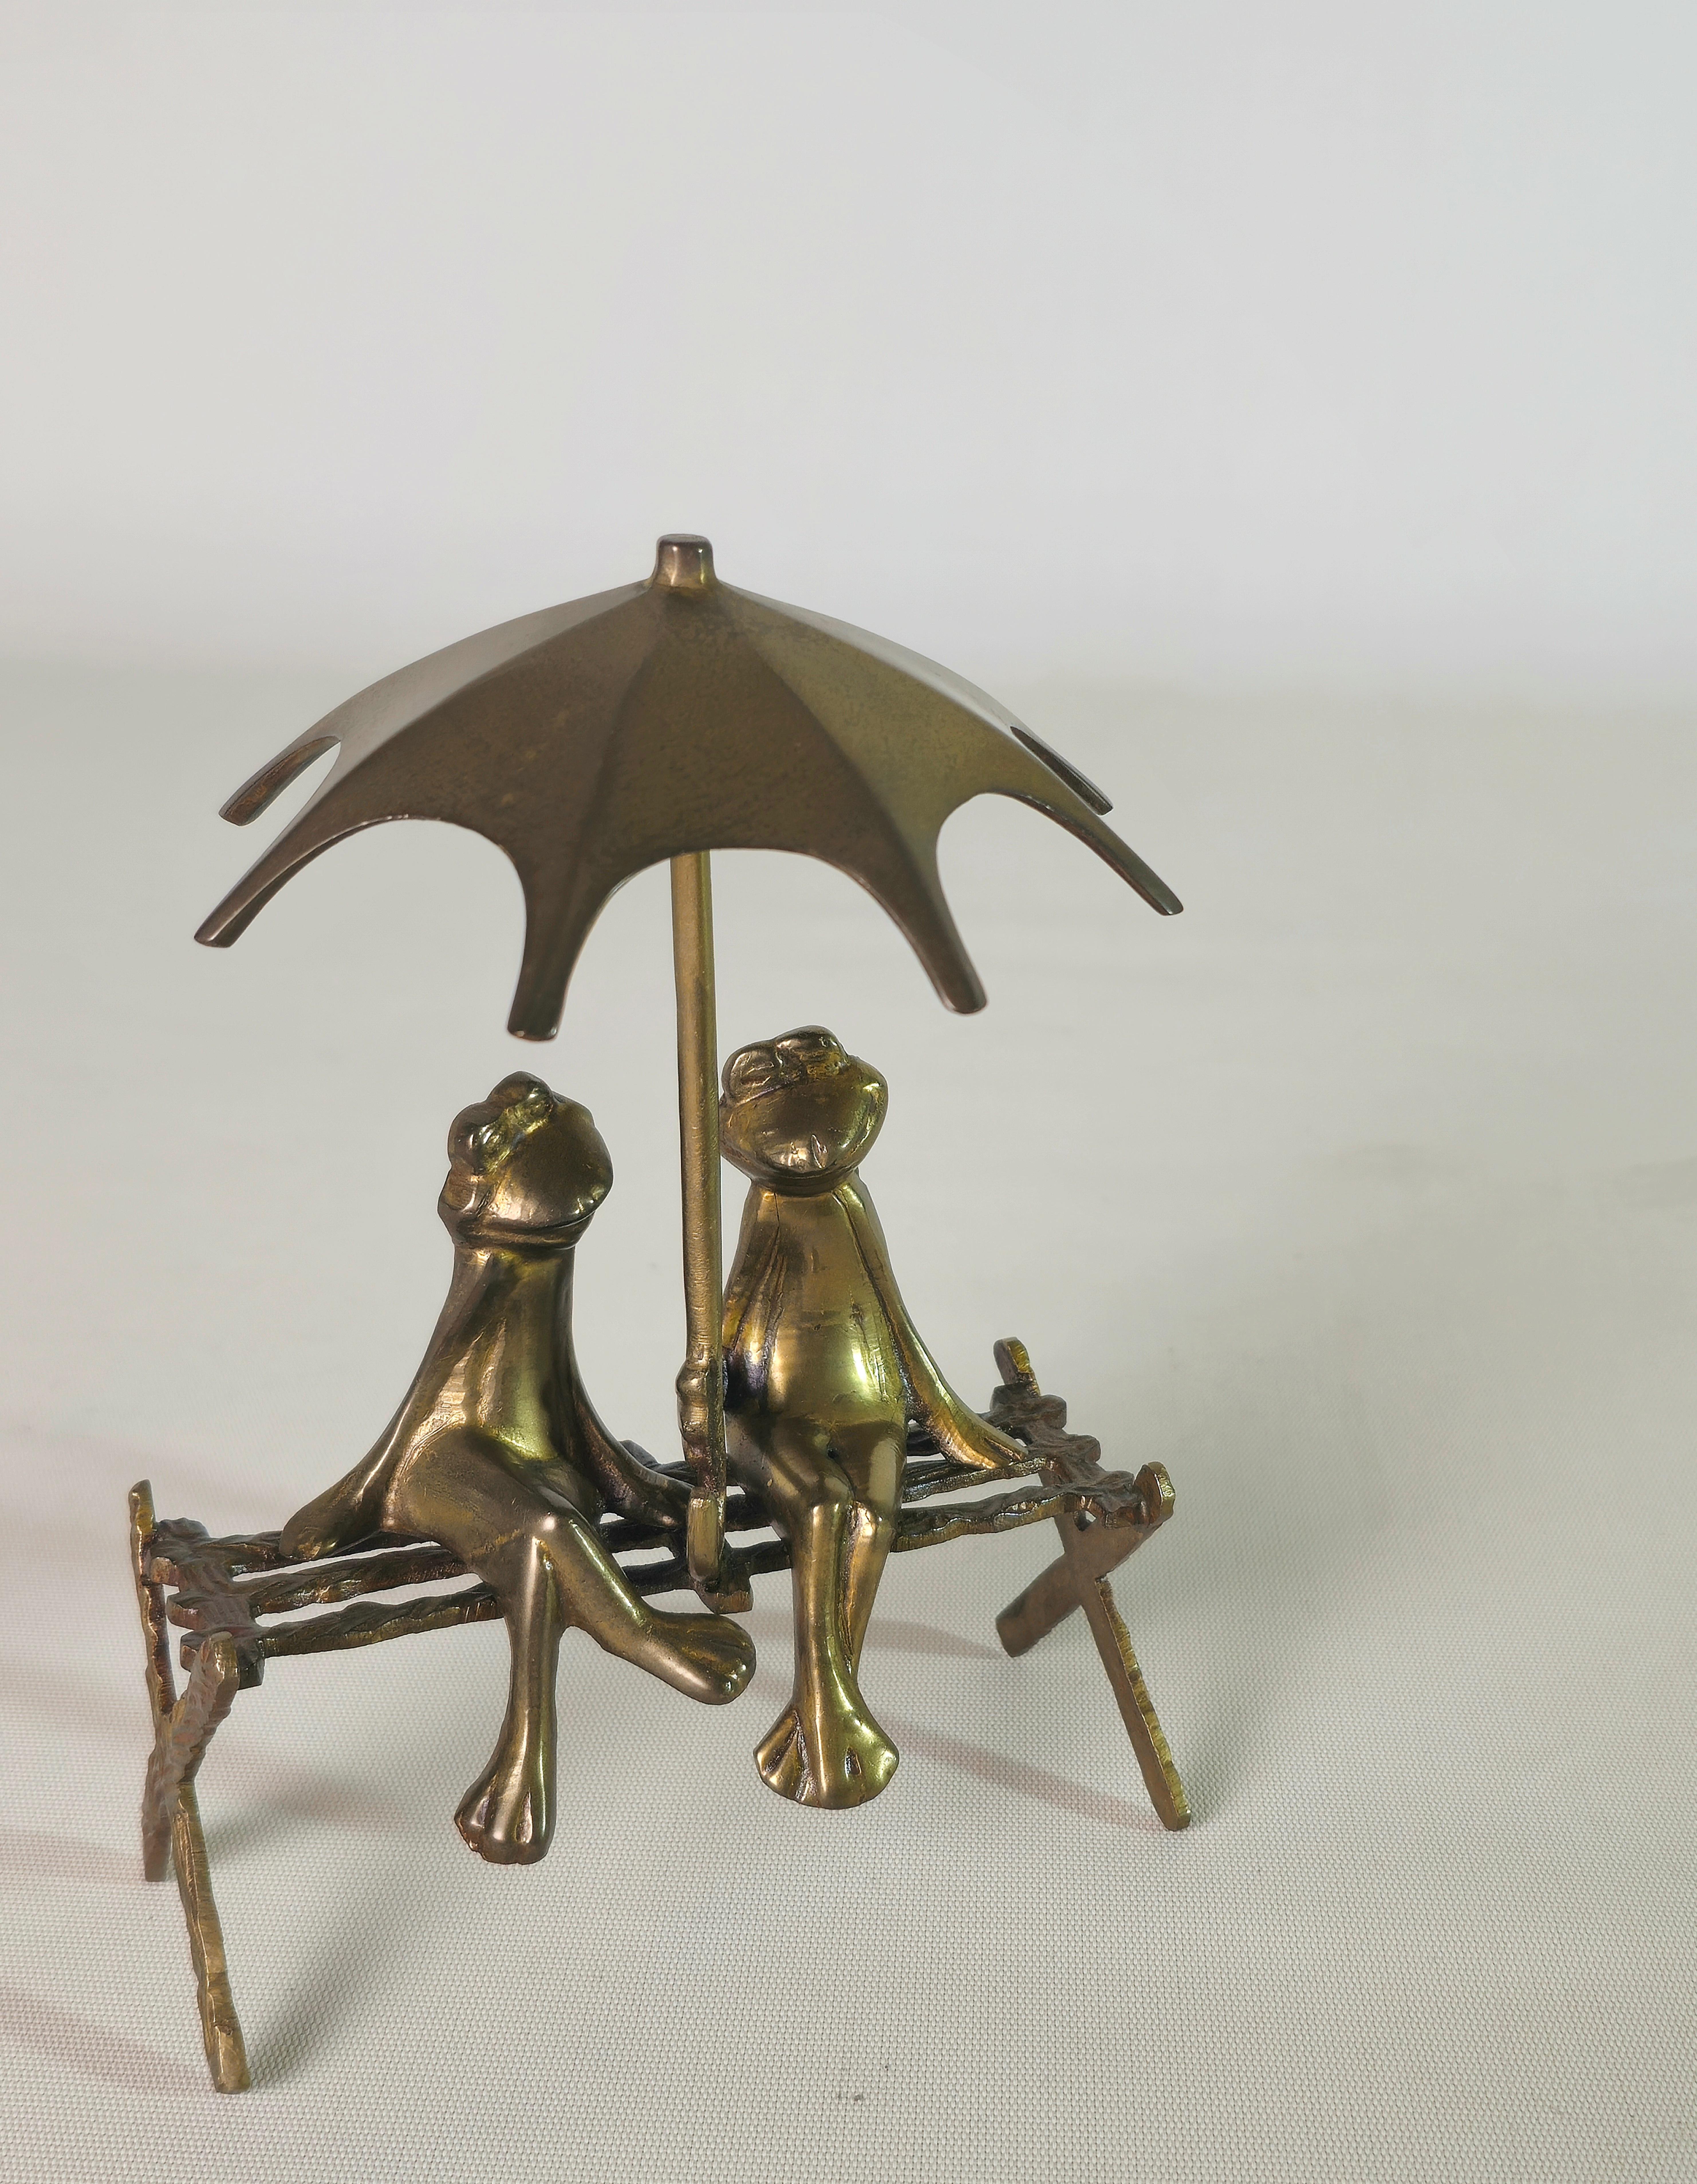 20th Century Brass Decorative Object Midcentury Modern Italia Design 1960/70s